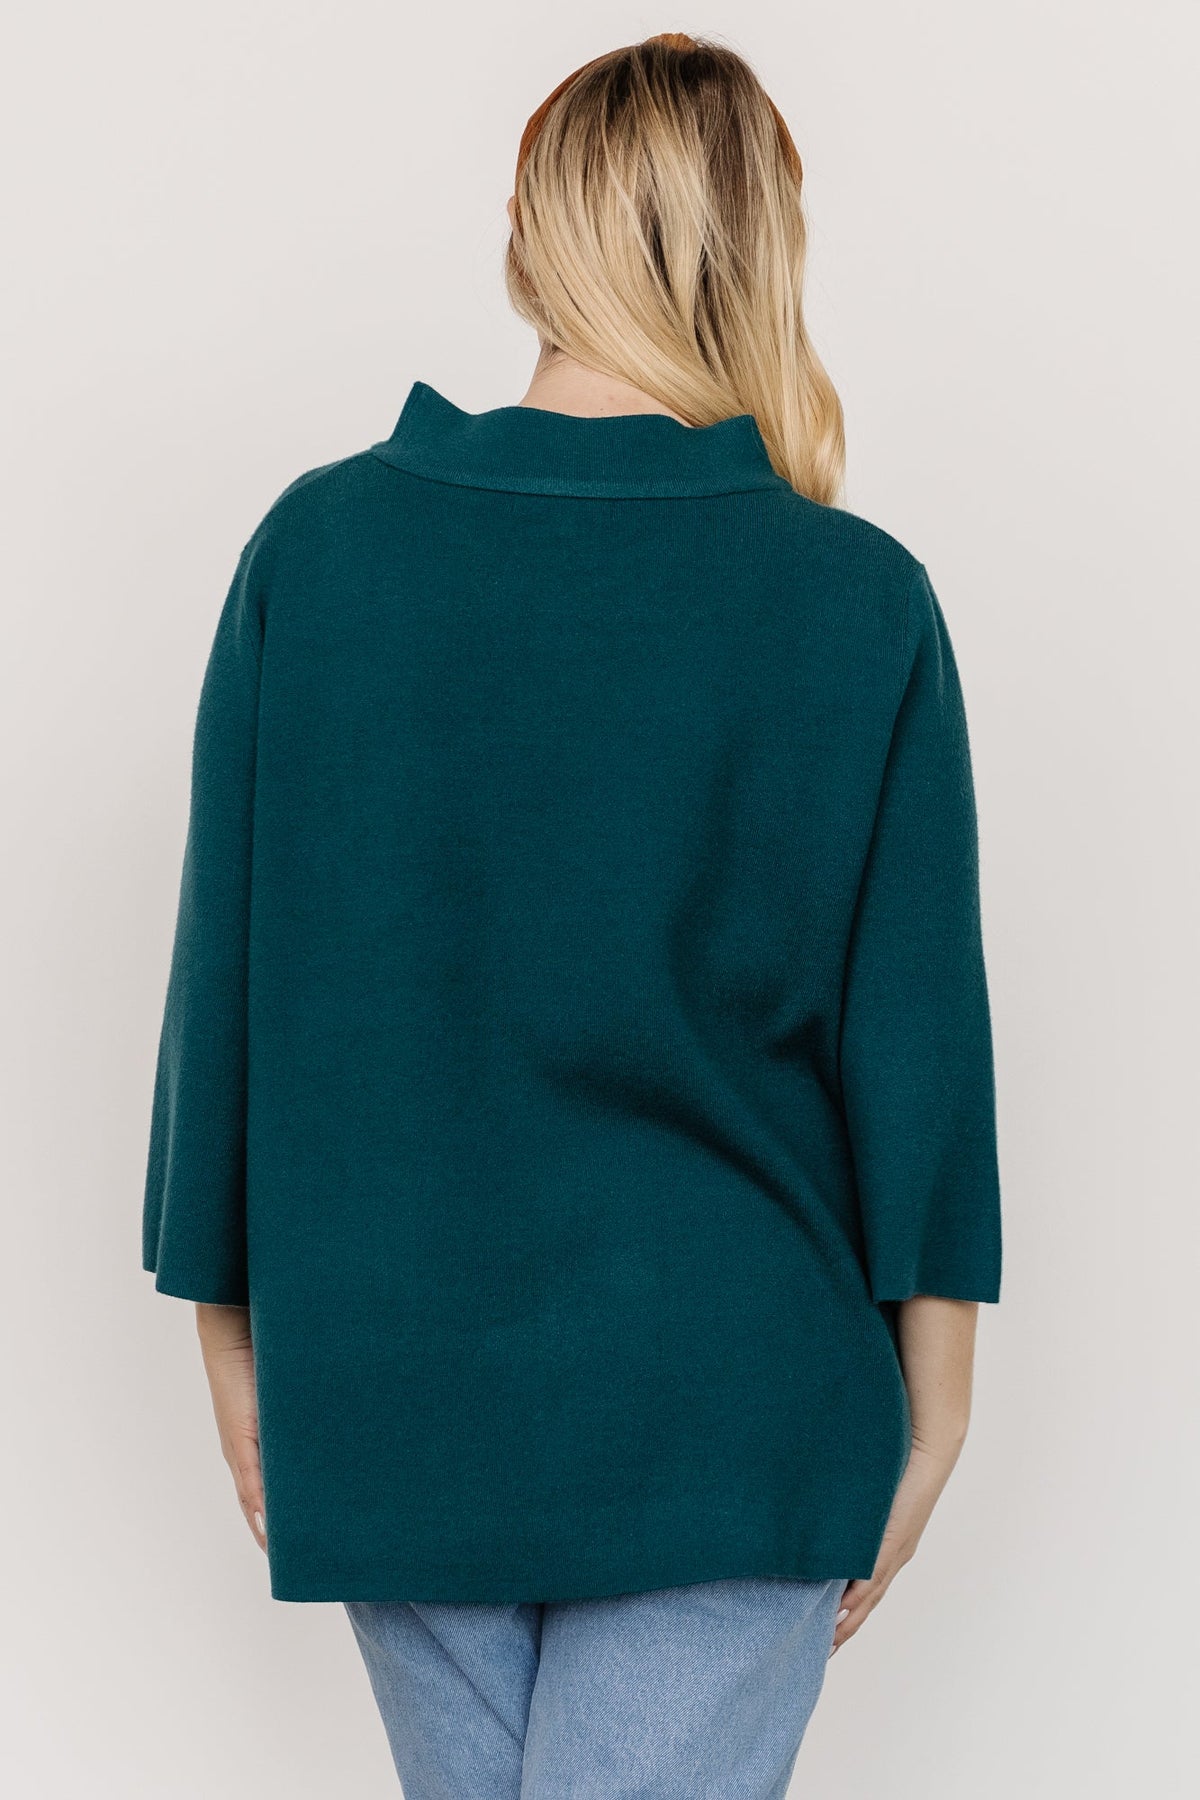 Baltic Born Zola Bell Sleeve Sweater | Light Blue - L